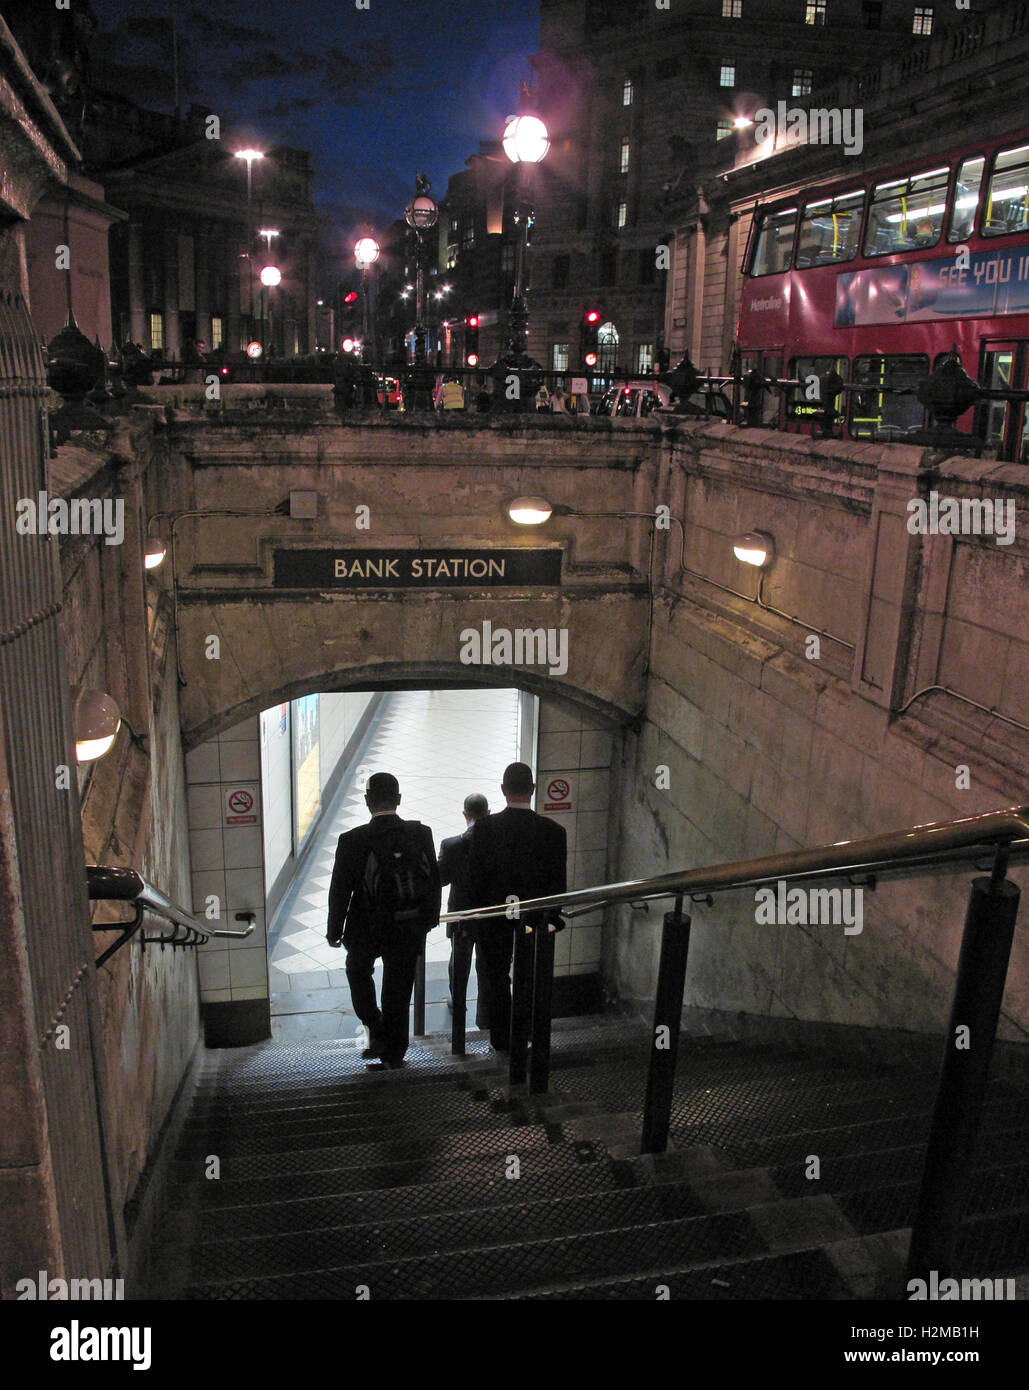 Bank Tube Station and passengers, City Of London, at Dusk Stock Photo